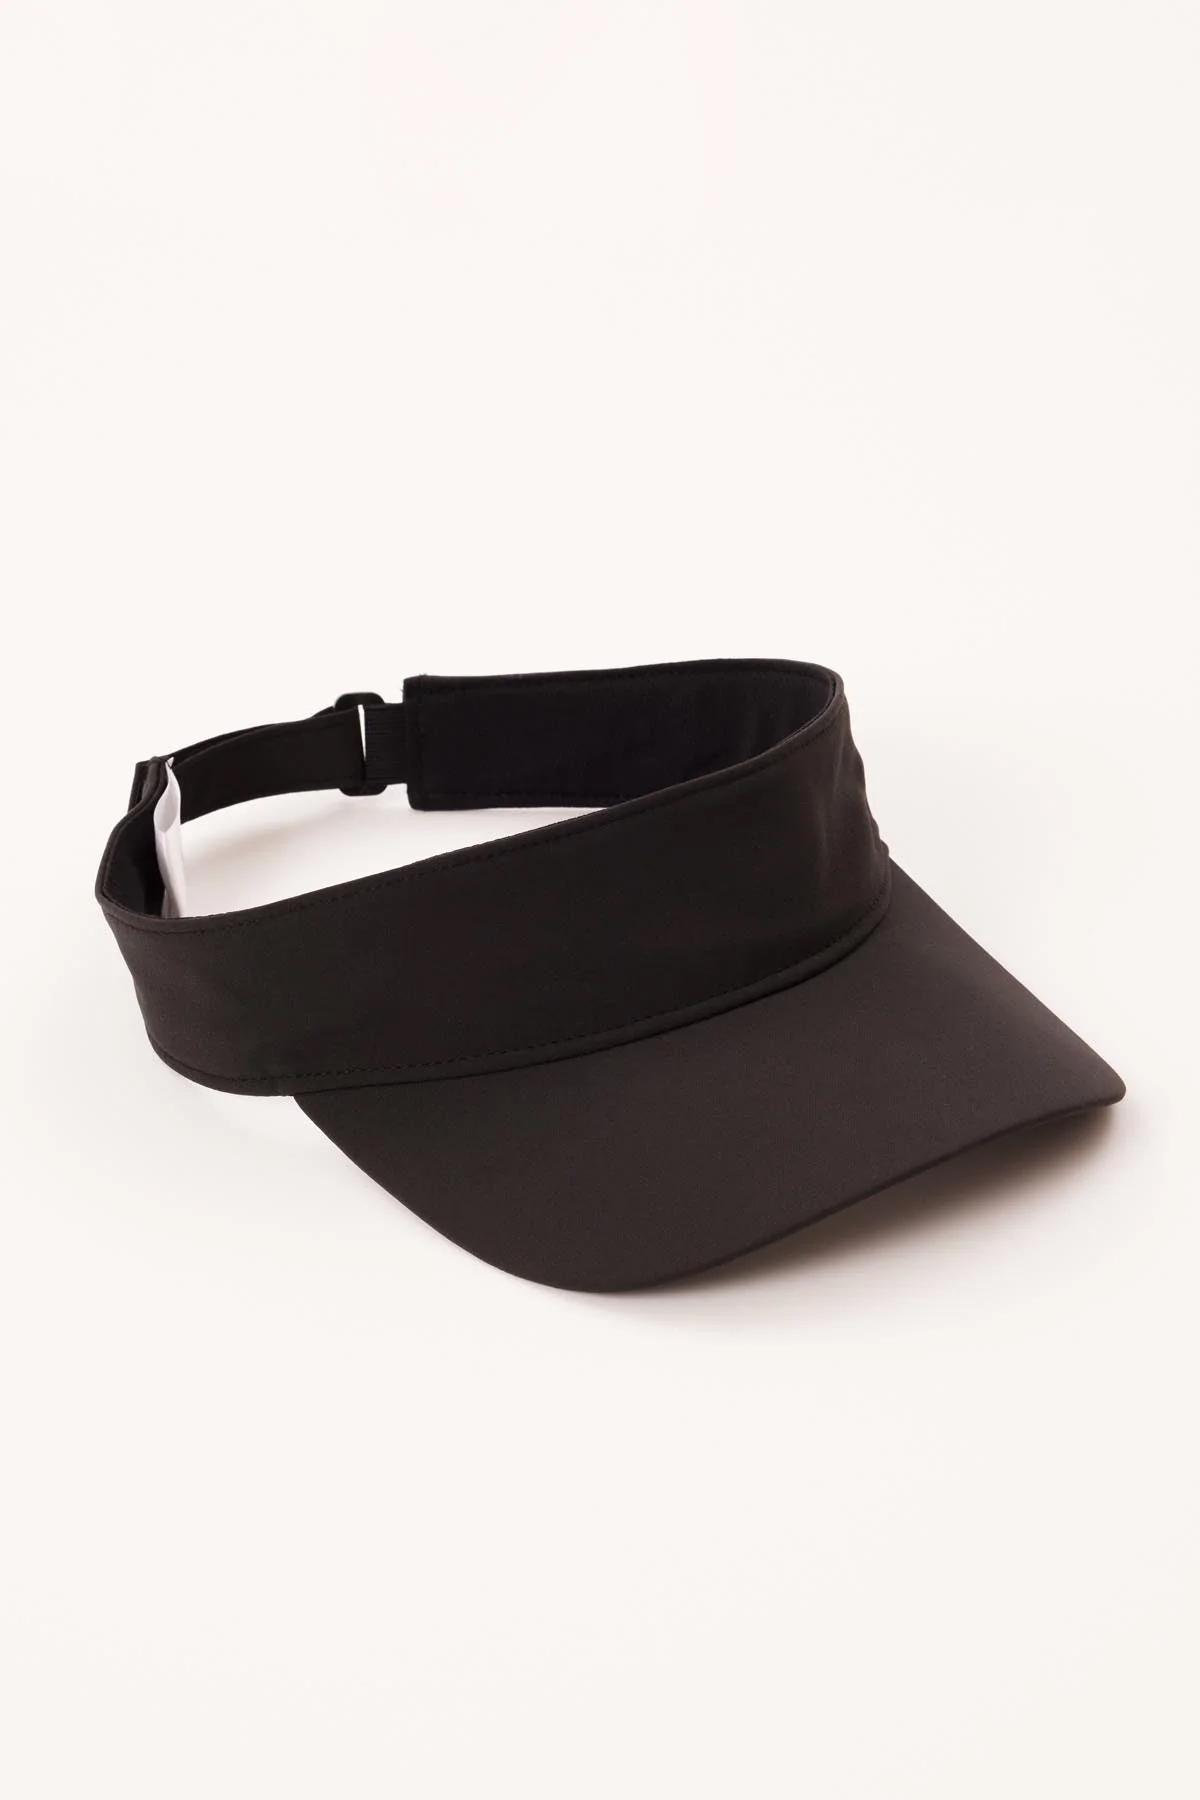 A black visor